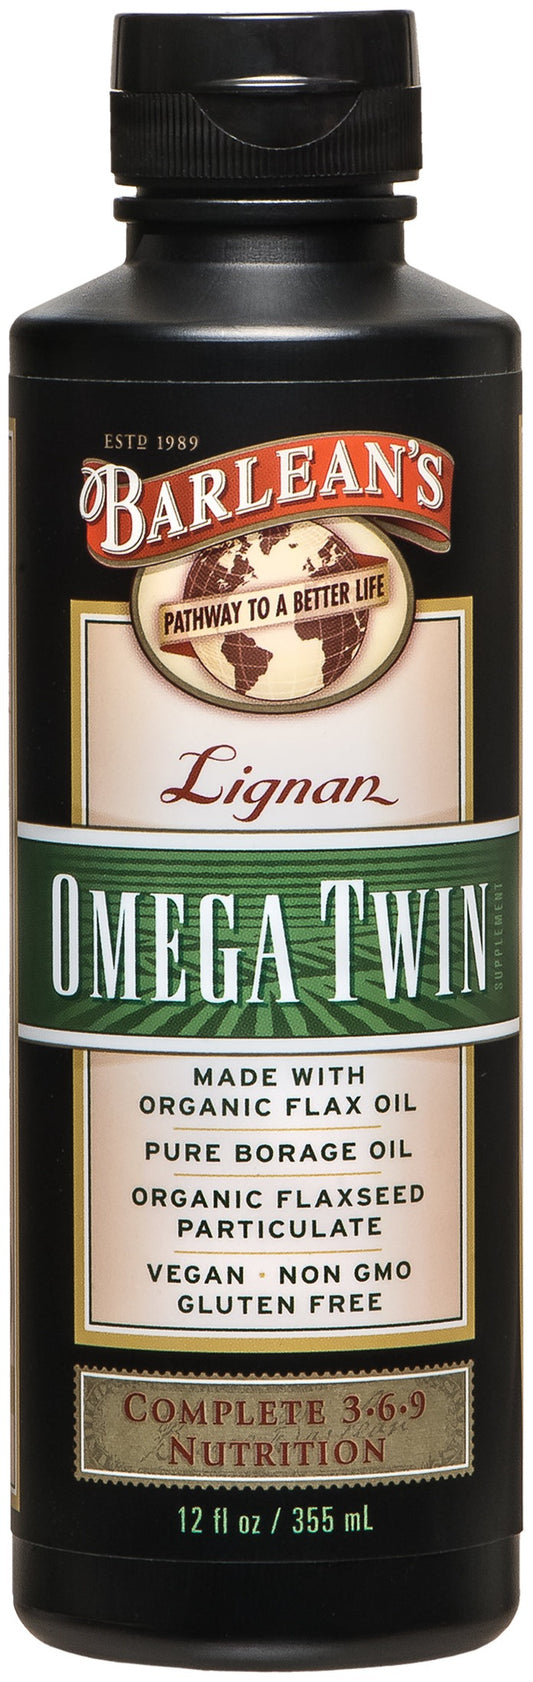 Bottle of Omega Twin